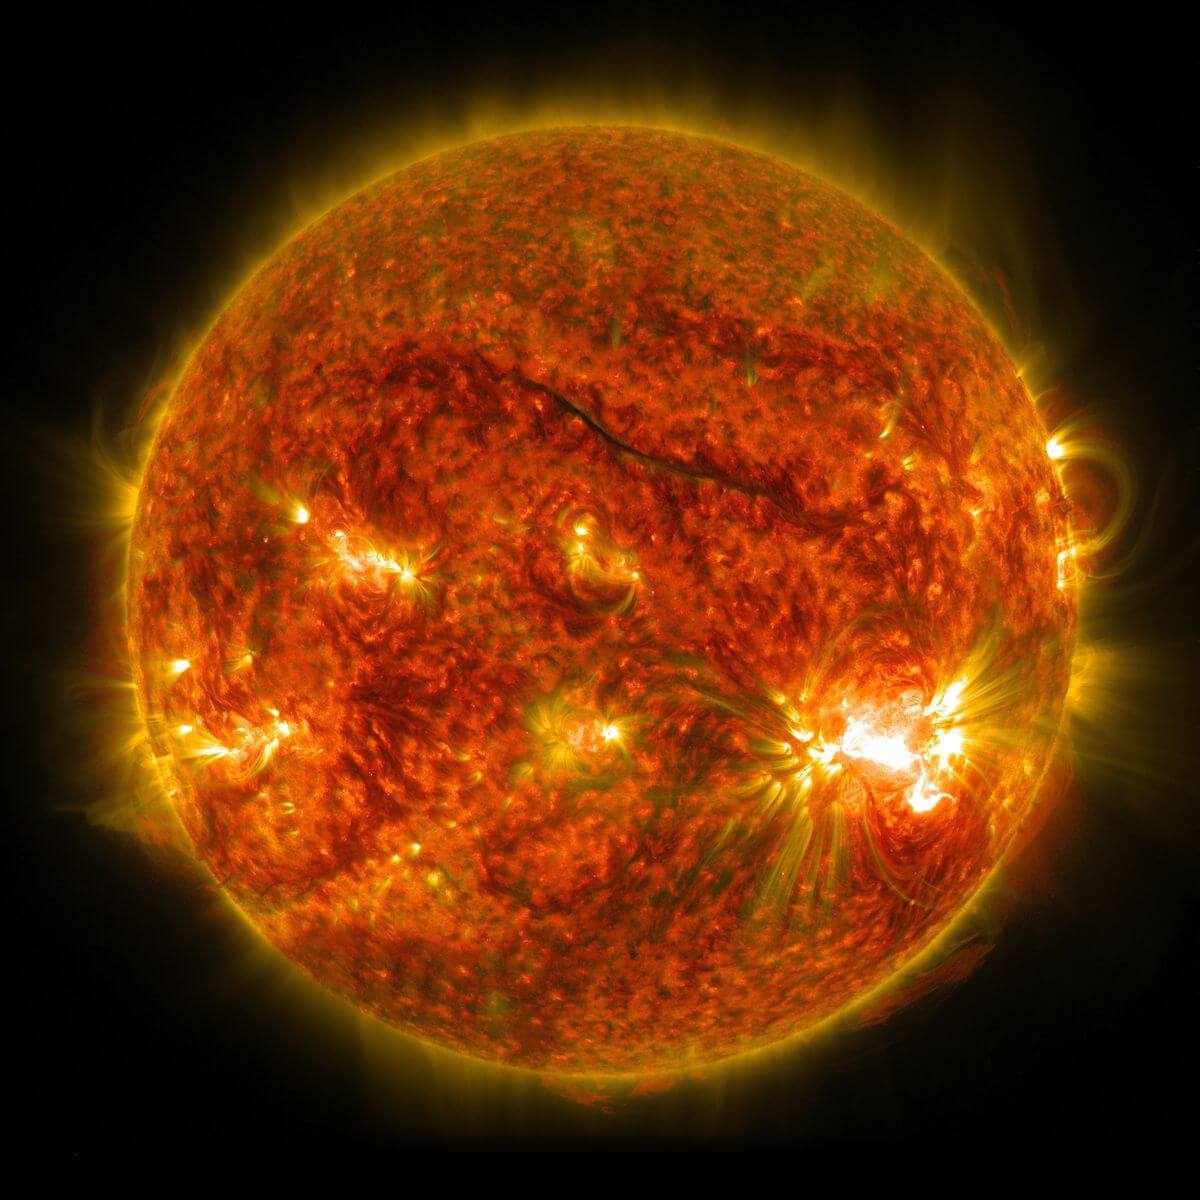 The Sun. Credit https://www.nasa.gov/content/goddard/one-giant-sunspot-6-substantial-flares/